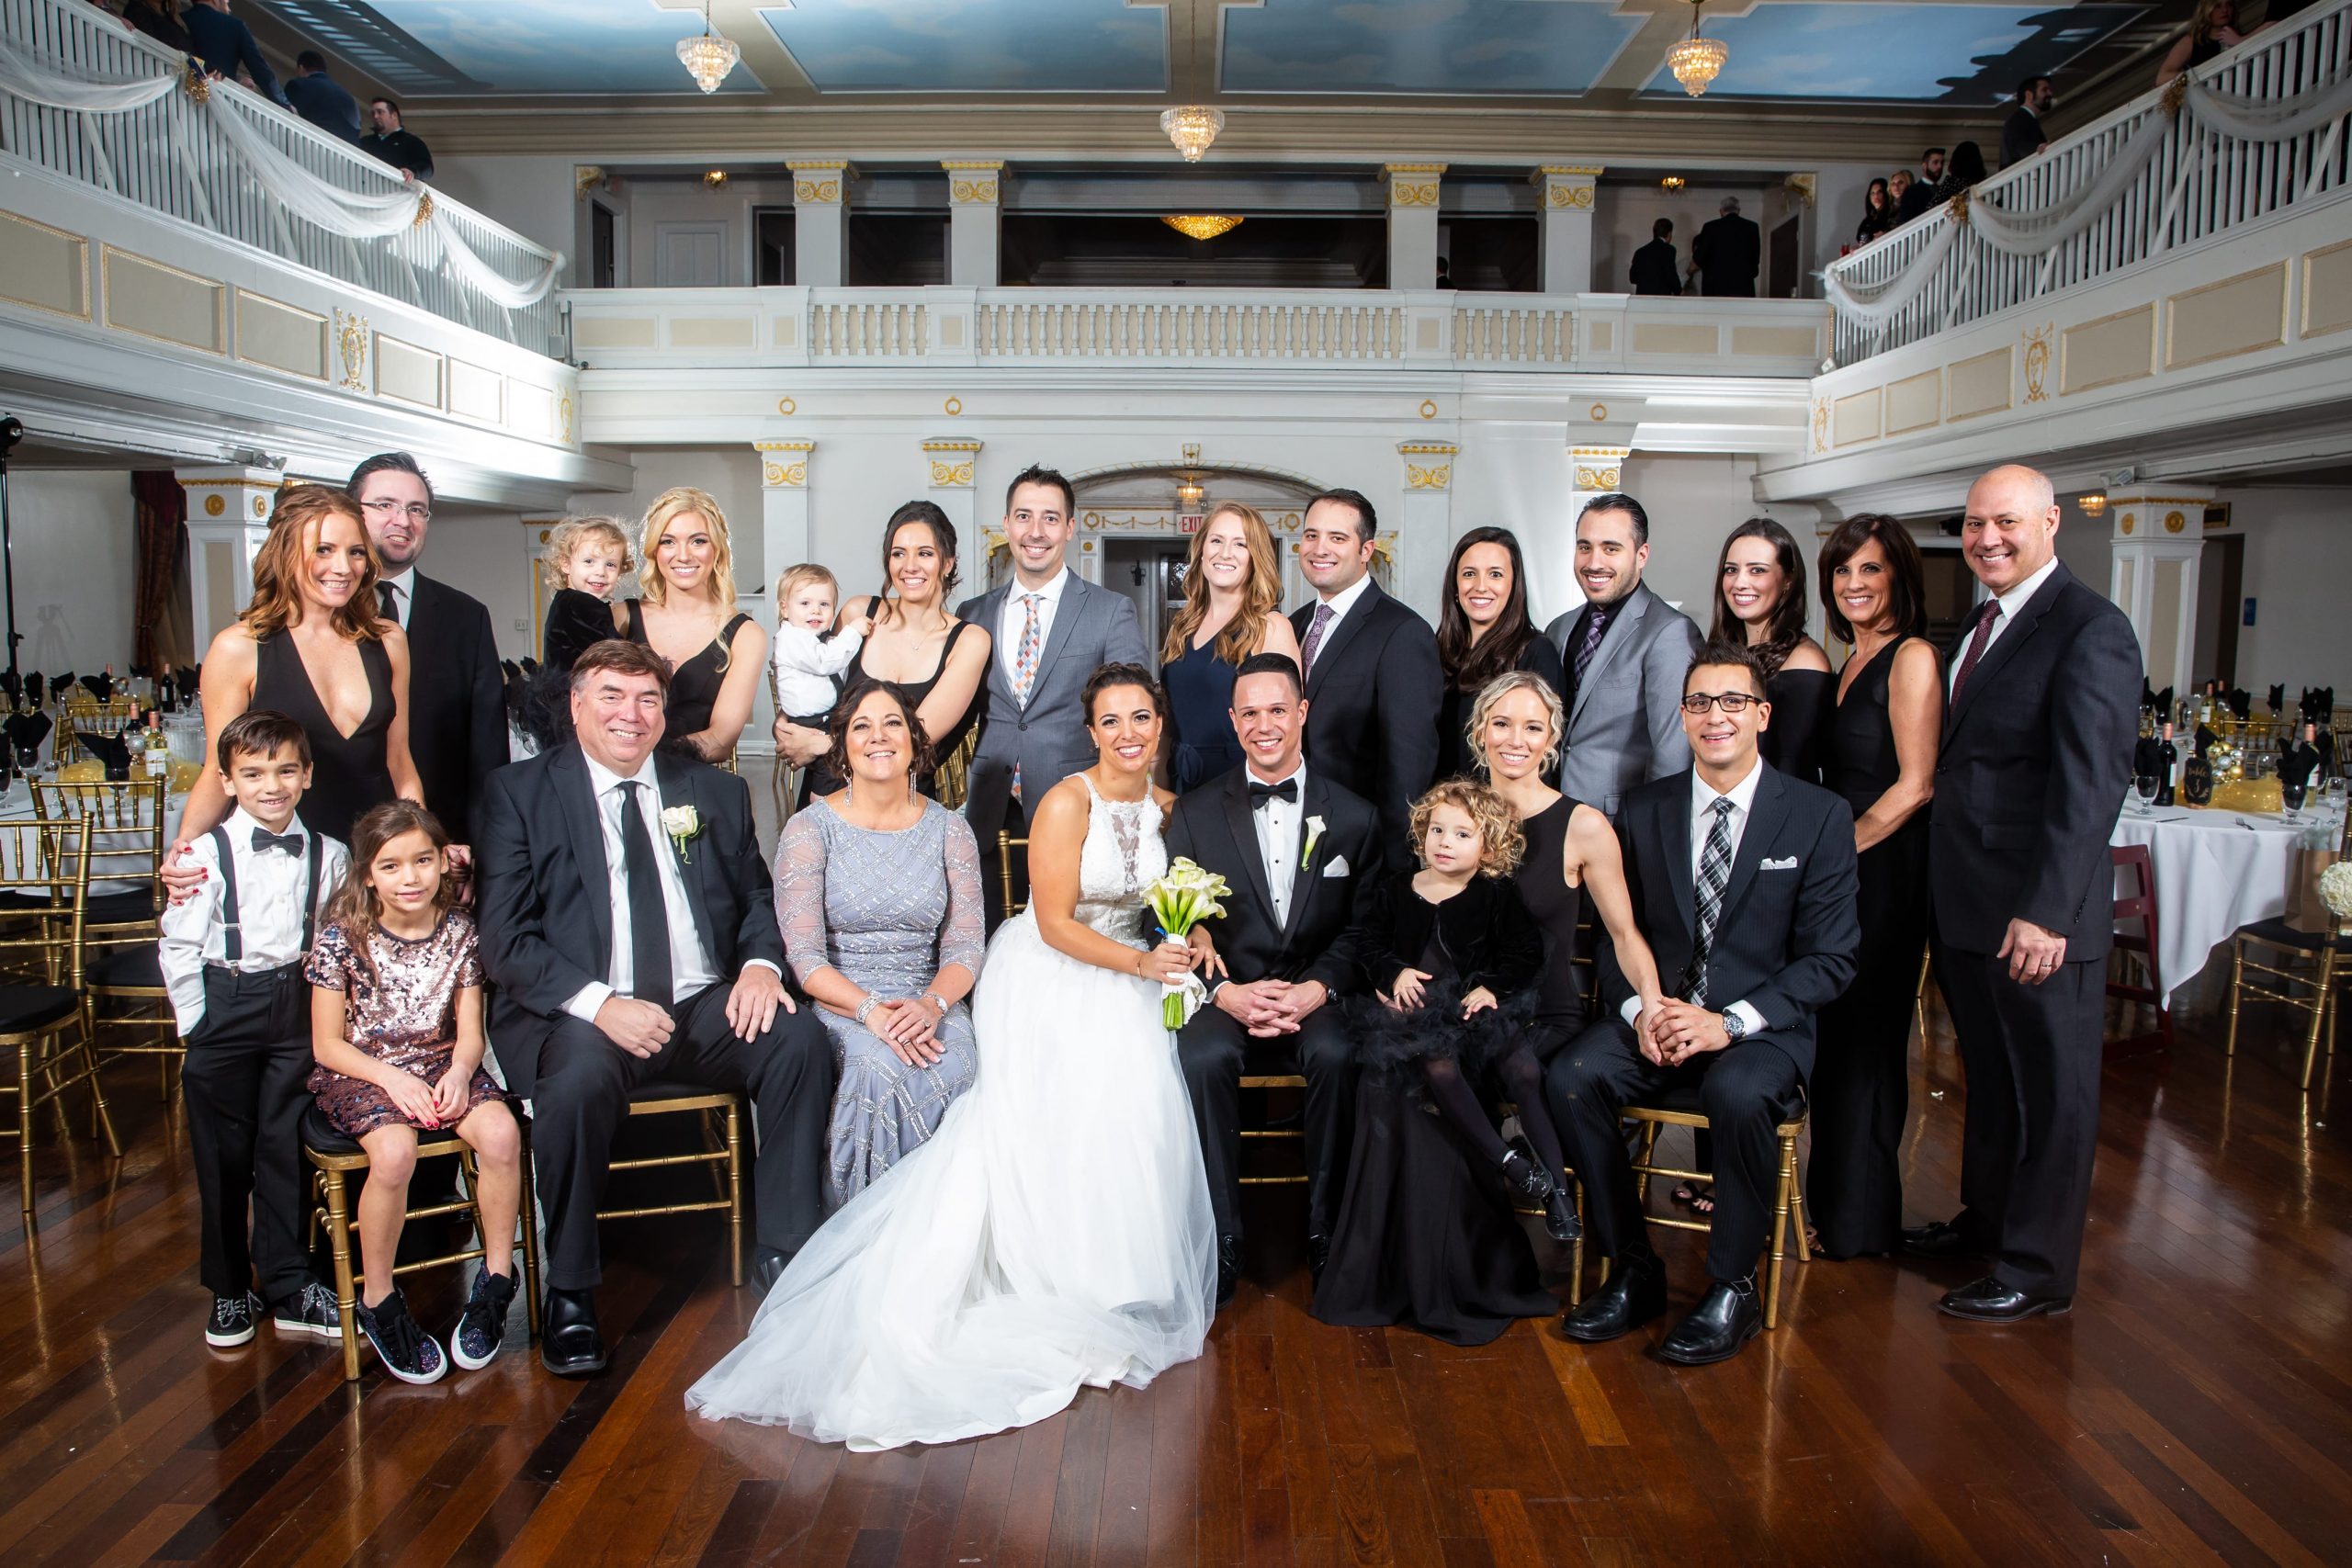 family formal wedding photos at reception